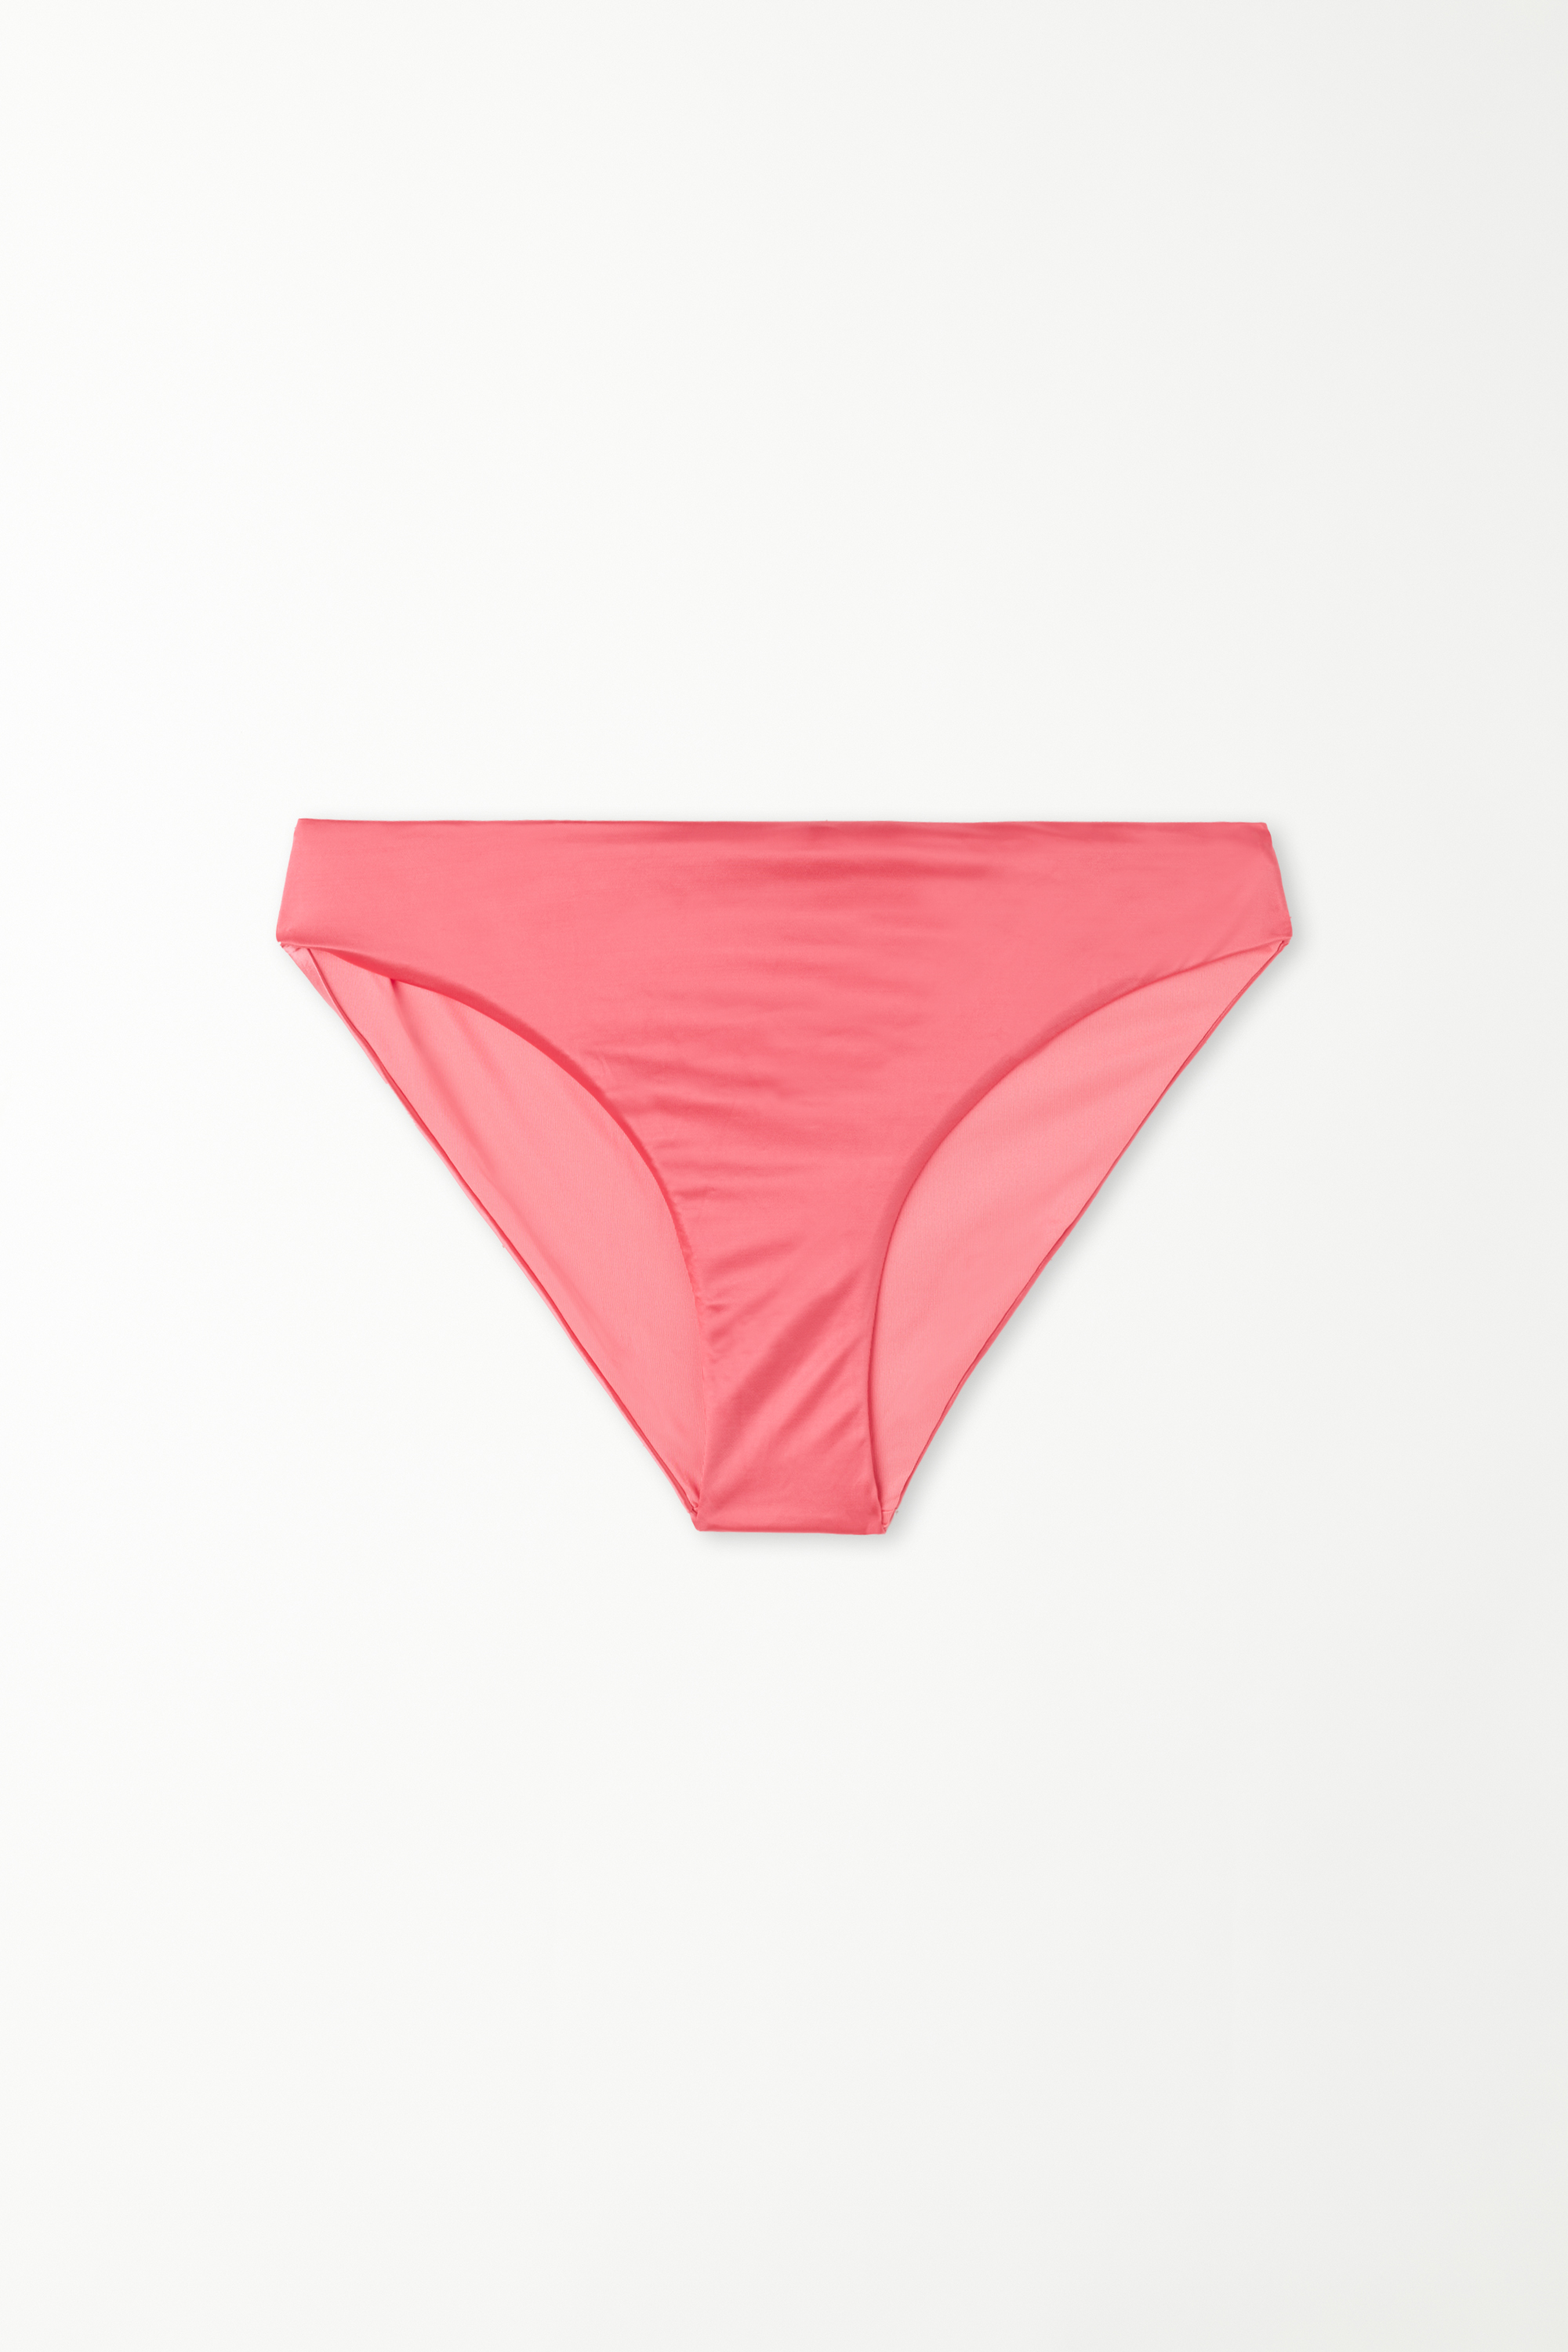 Shiny Summer Pink Classic Bikini Bottom